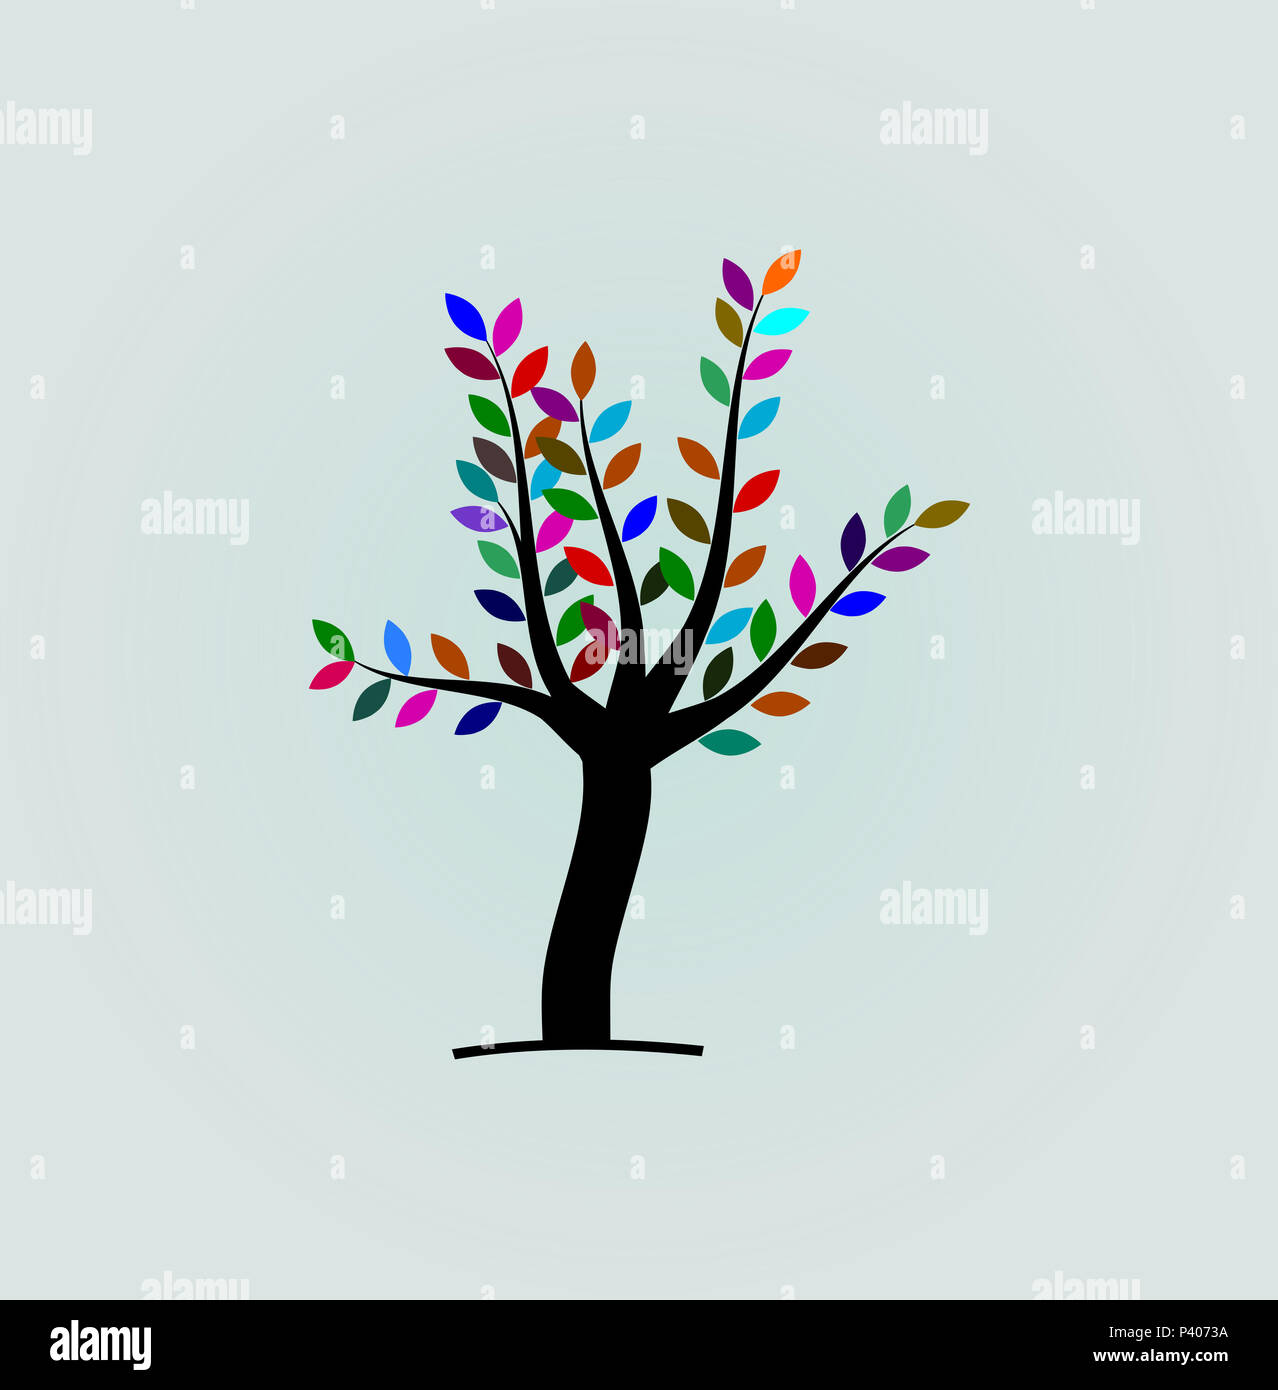 Baum mit bunten Blatt Abbildungen Stockfoto